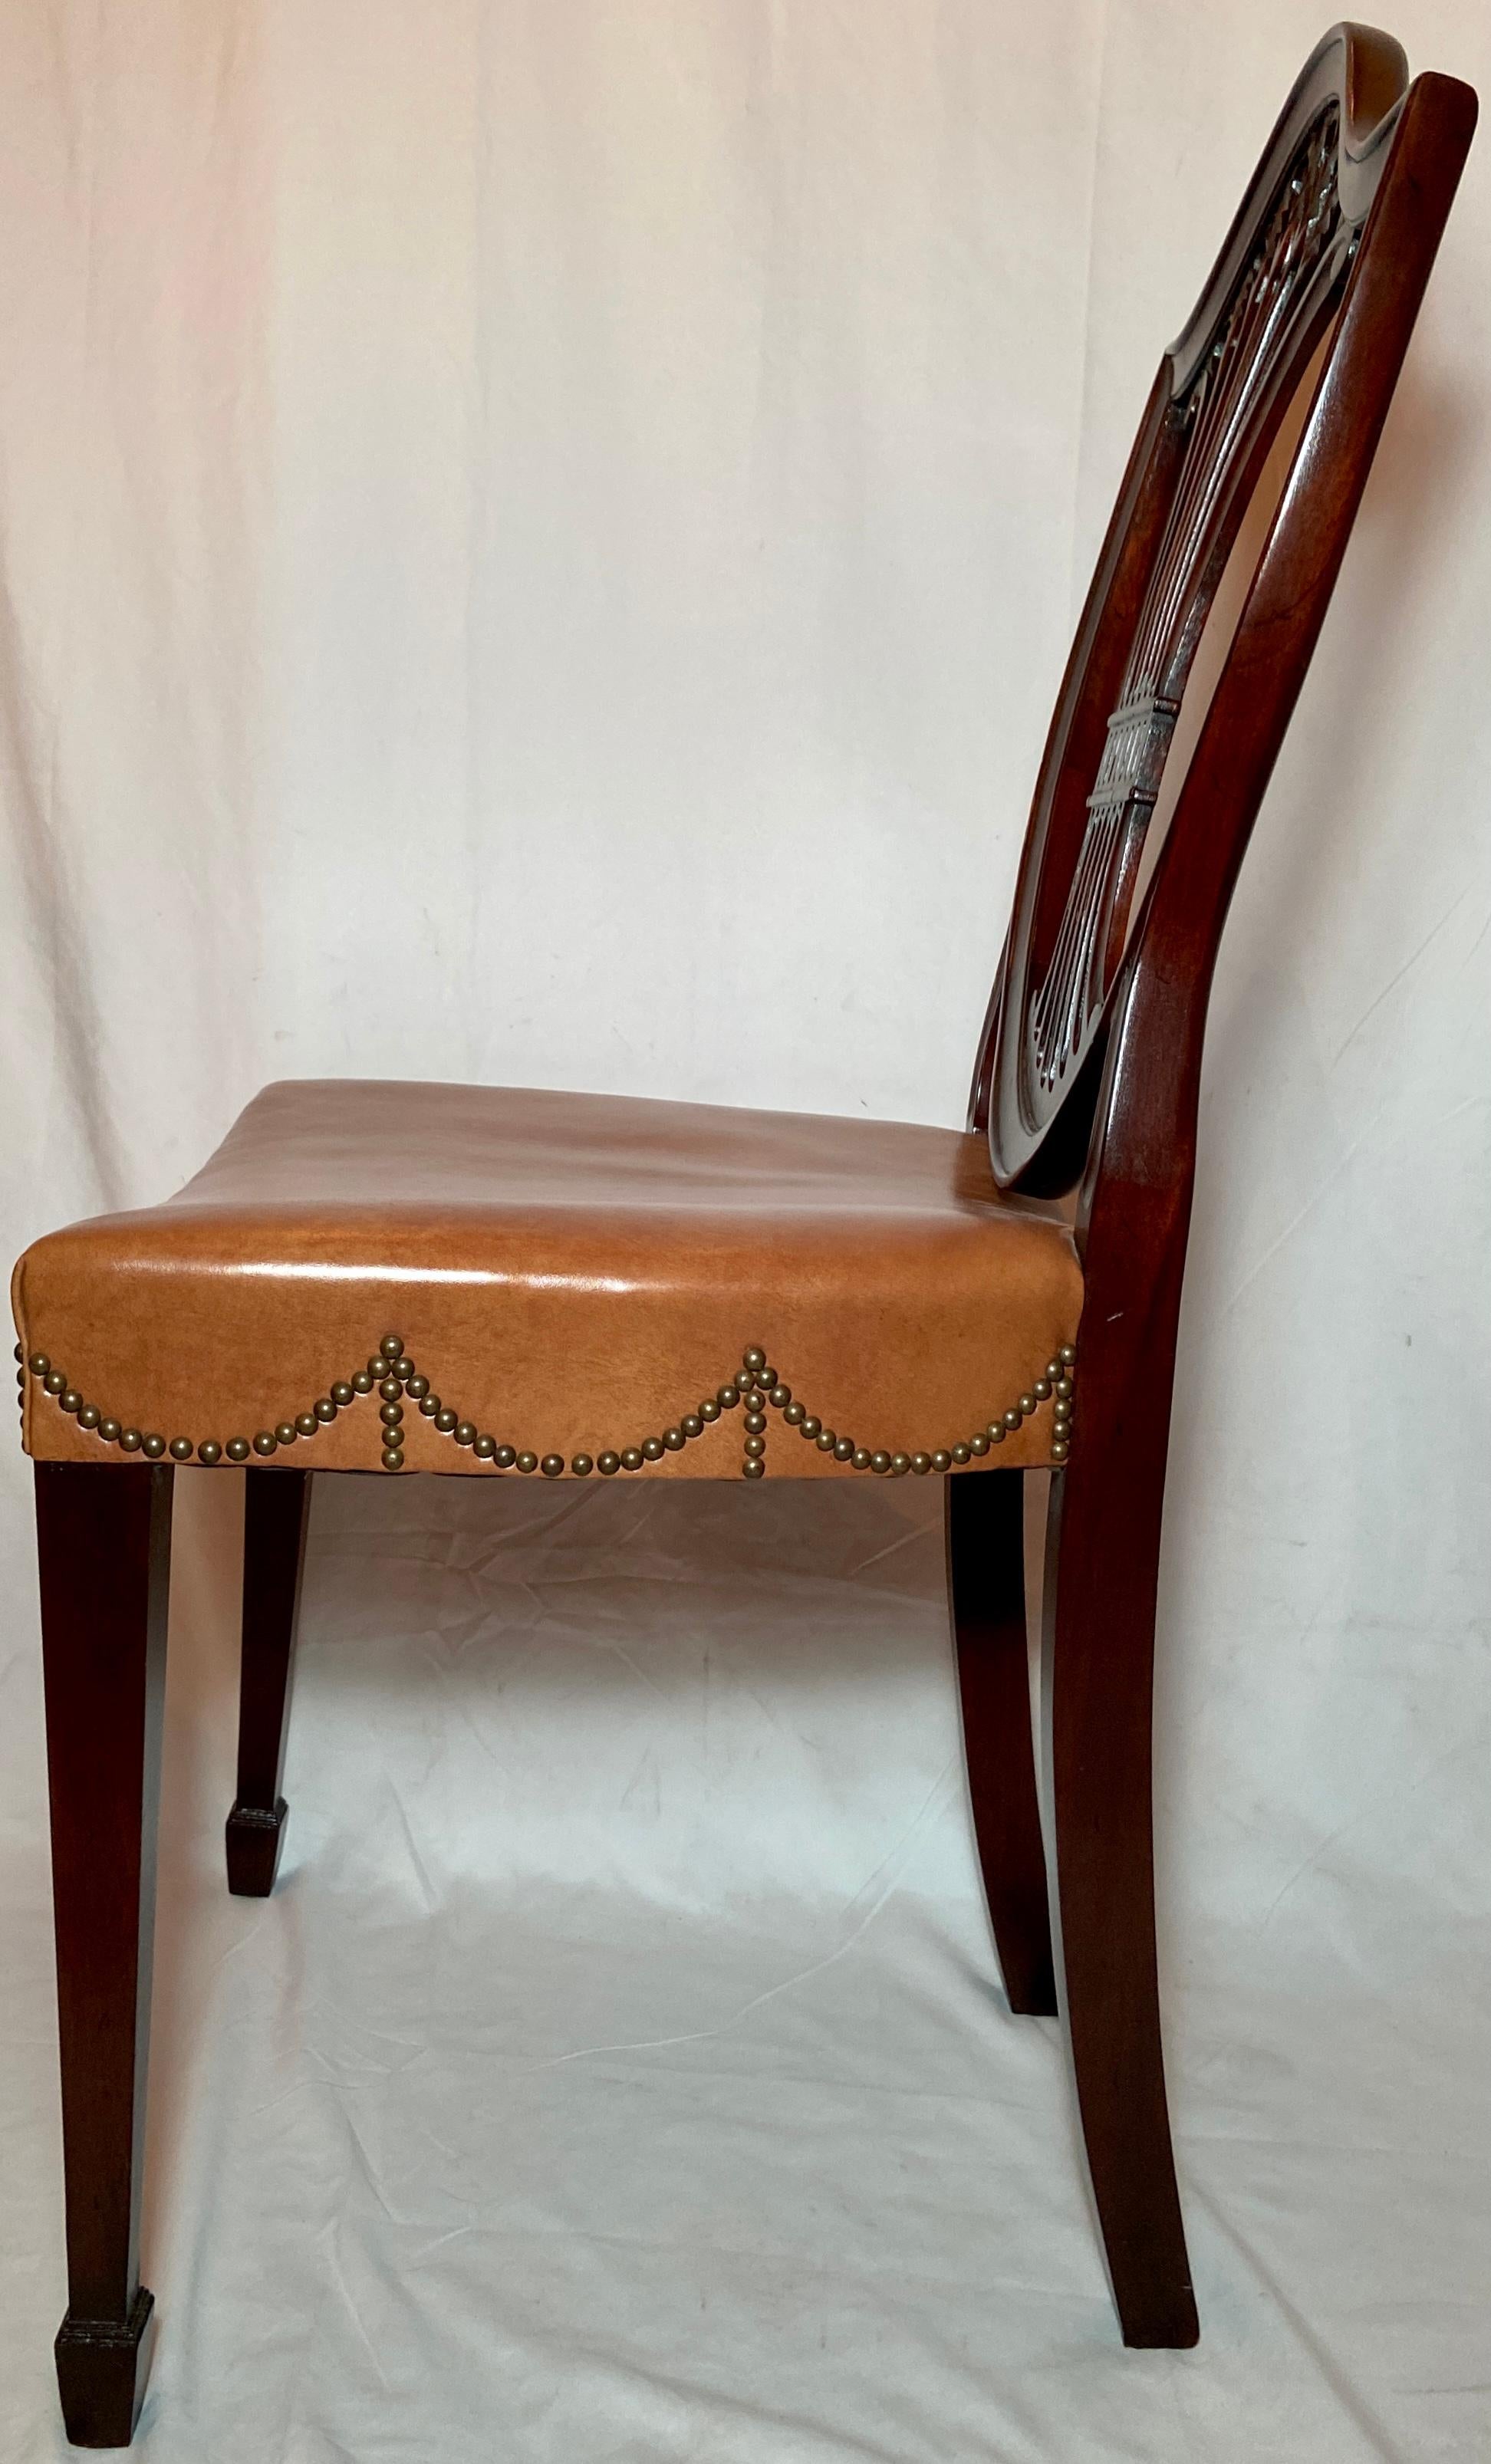 Leather Set of 10 English Mahogany Hepplewhite Shield-Back Dining Chairs, Circa 1940-50